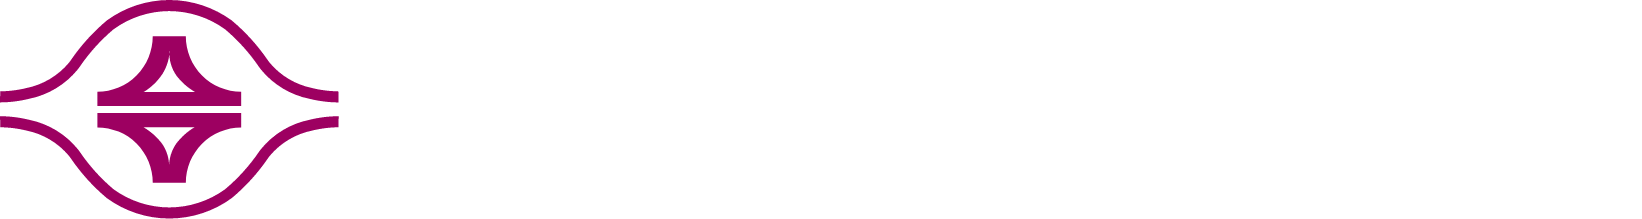 Formosa Plastics logo in transparent PNG format